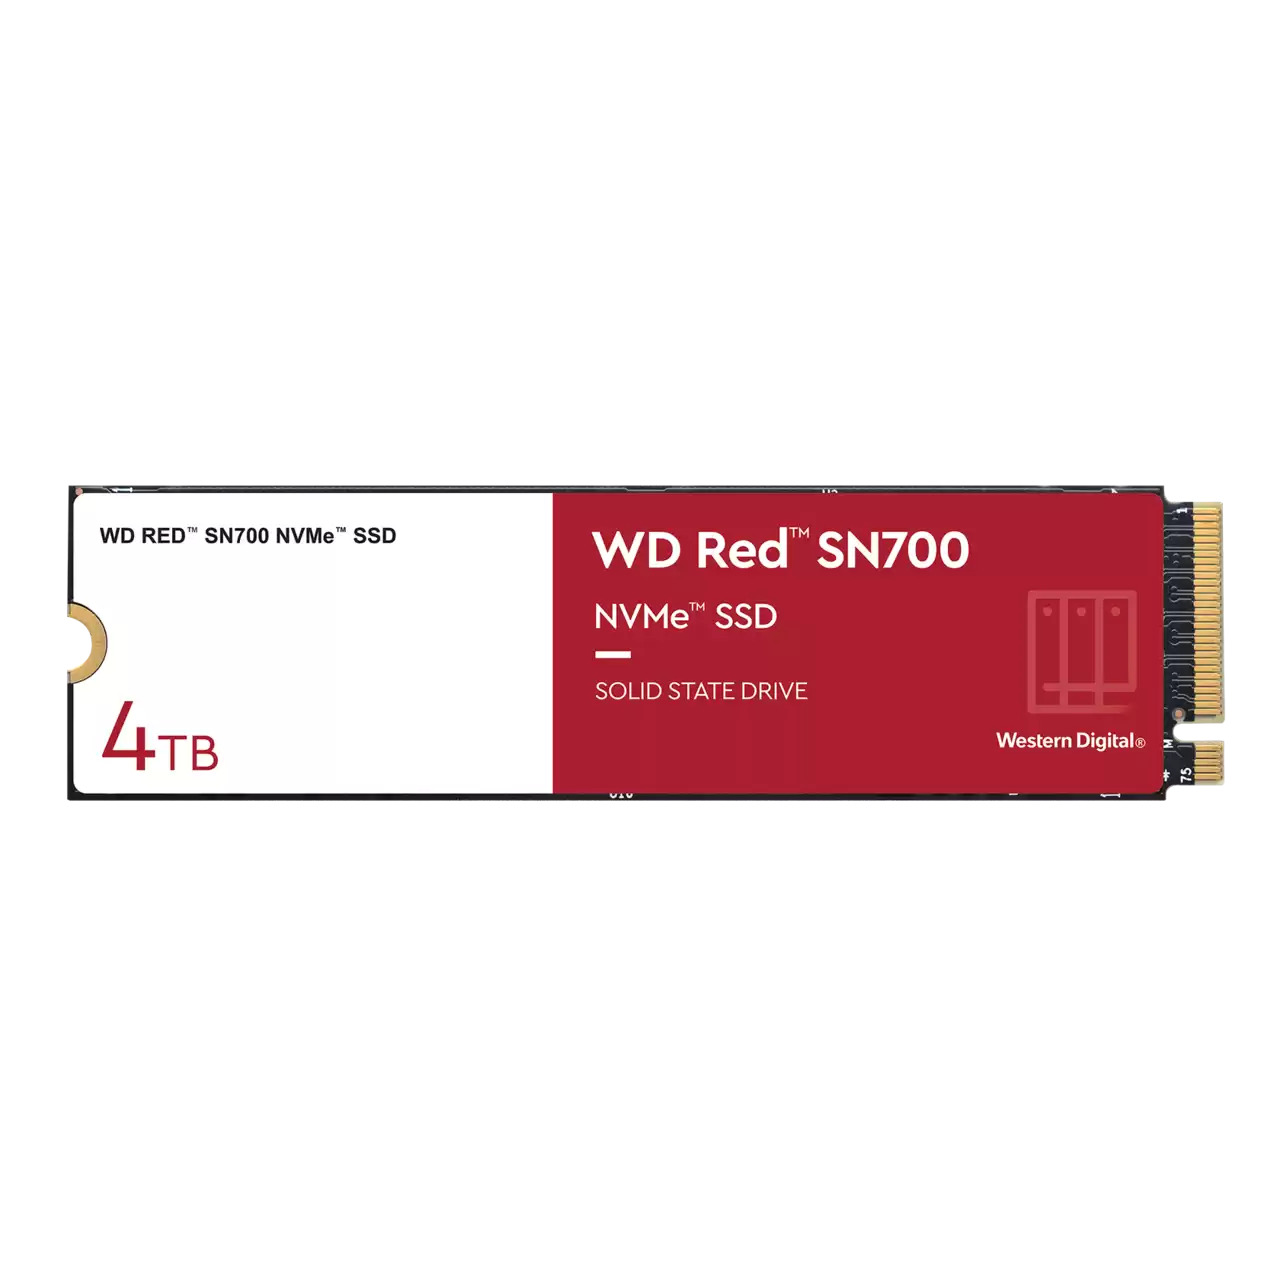 Hard disk ssd western digital wd red sn700 4tb m.2 2280